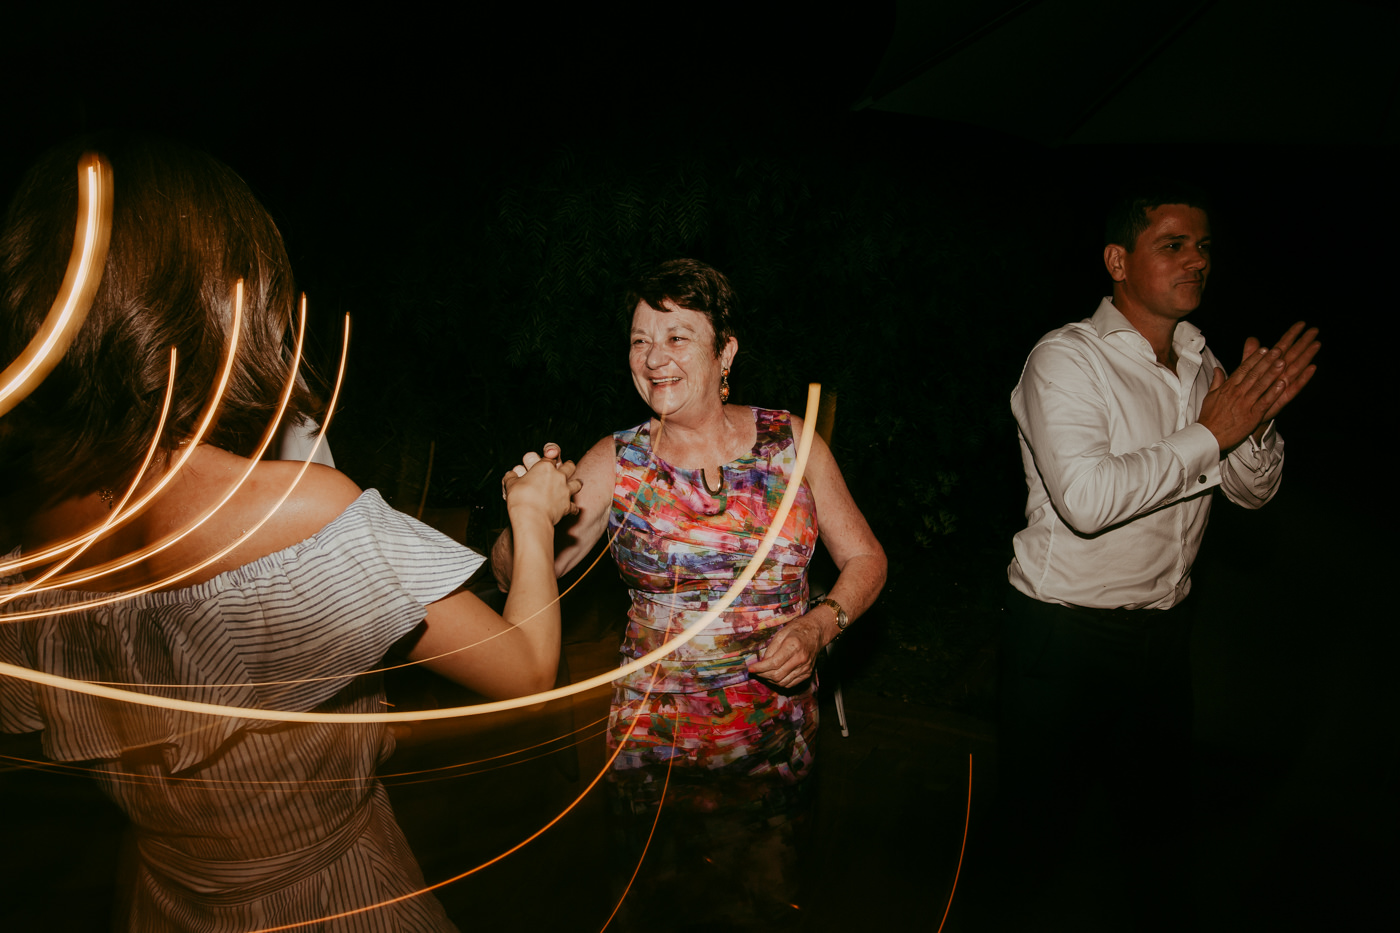 Anthony & Eliet - Wagga Wagga Wedding - Country NSW - Samantha Heather Photography-185.jpg